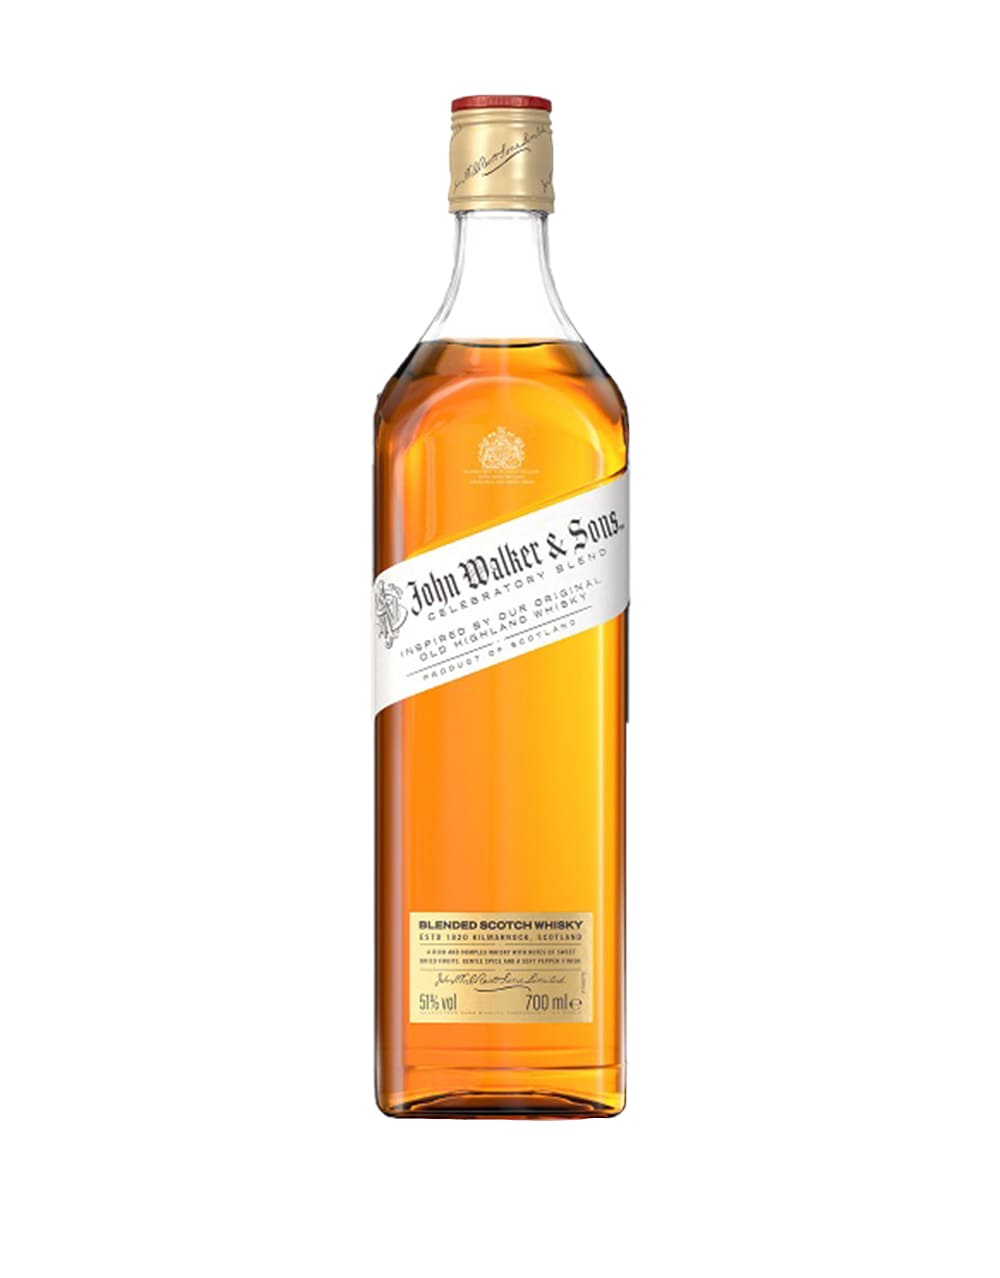 John Walker and Sons Celebratory Blend 200 Anniversary Scotch Whisky